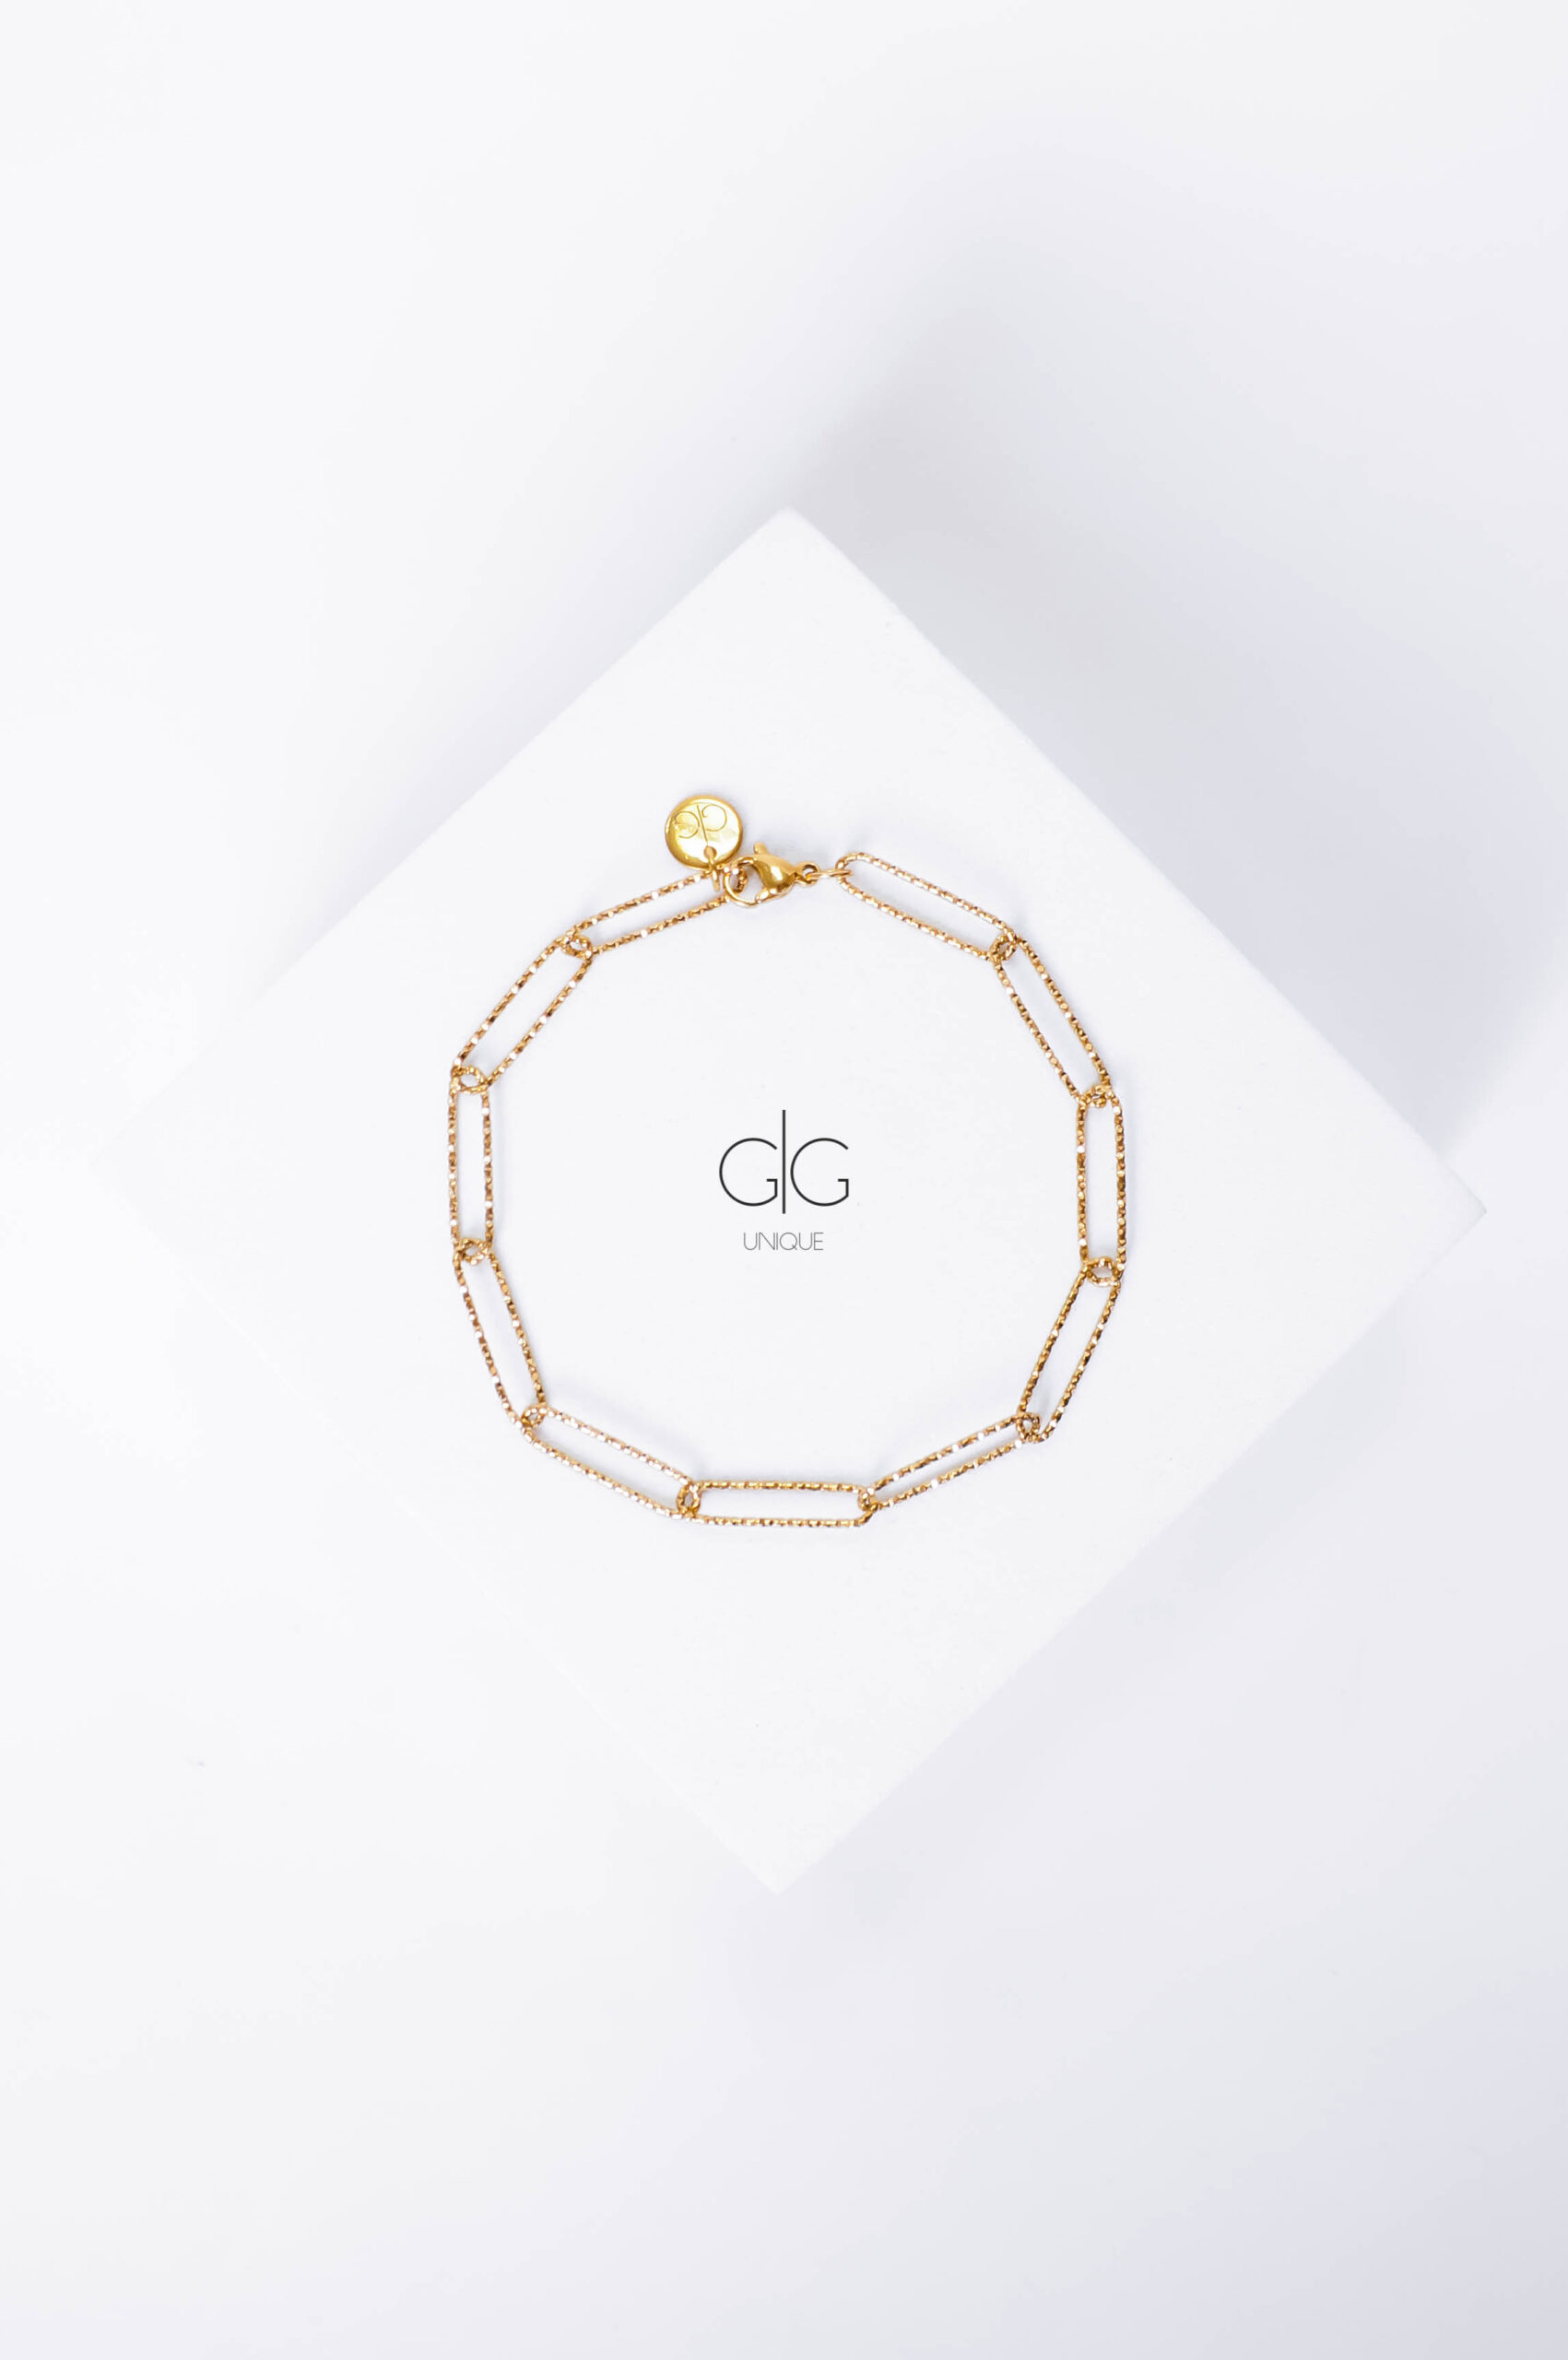 Shiny gold-plated chain bracelet - GG UNIQUE